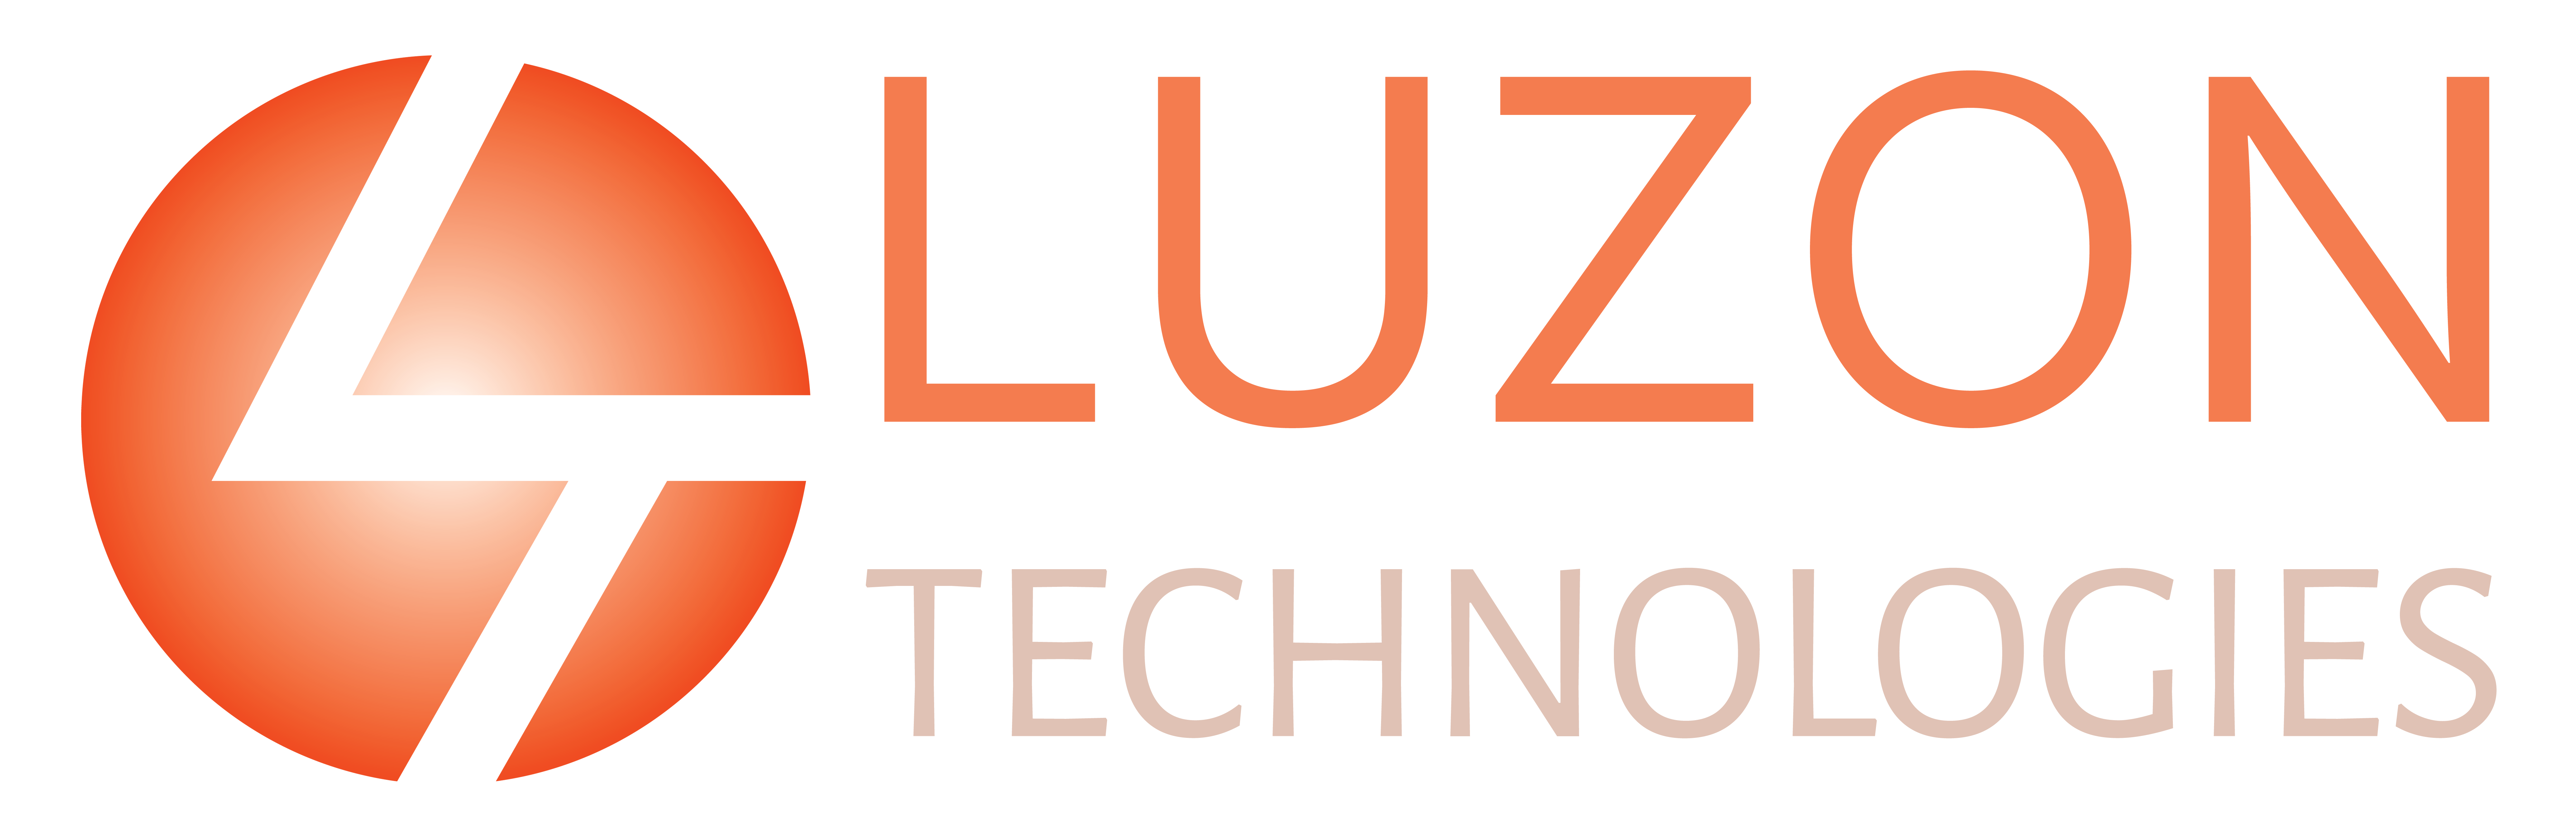 Web & Mobile Software Development Company | Luzontech